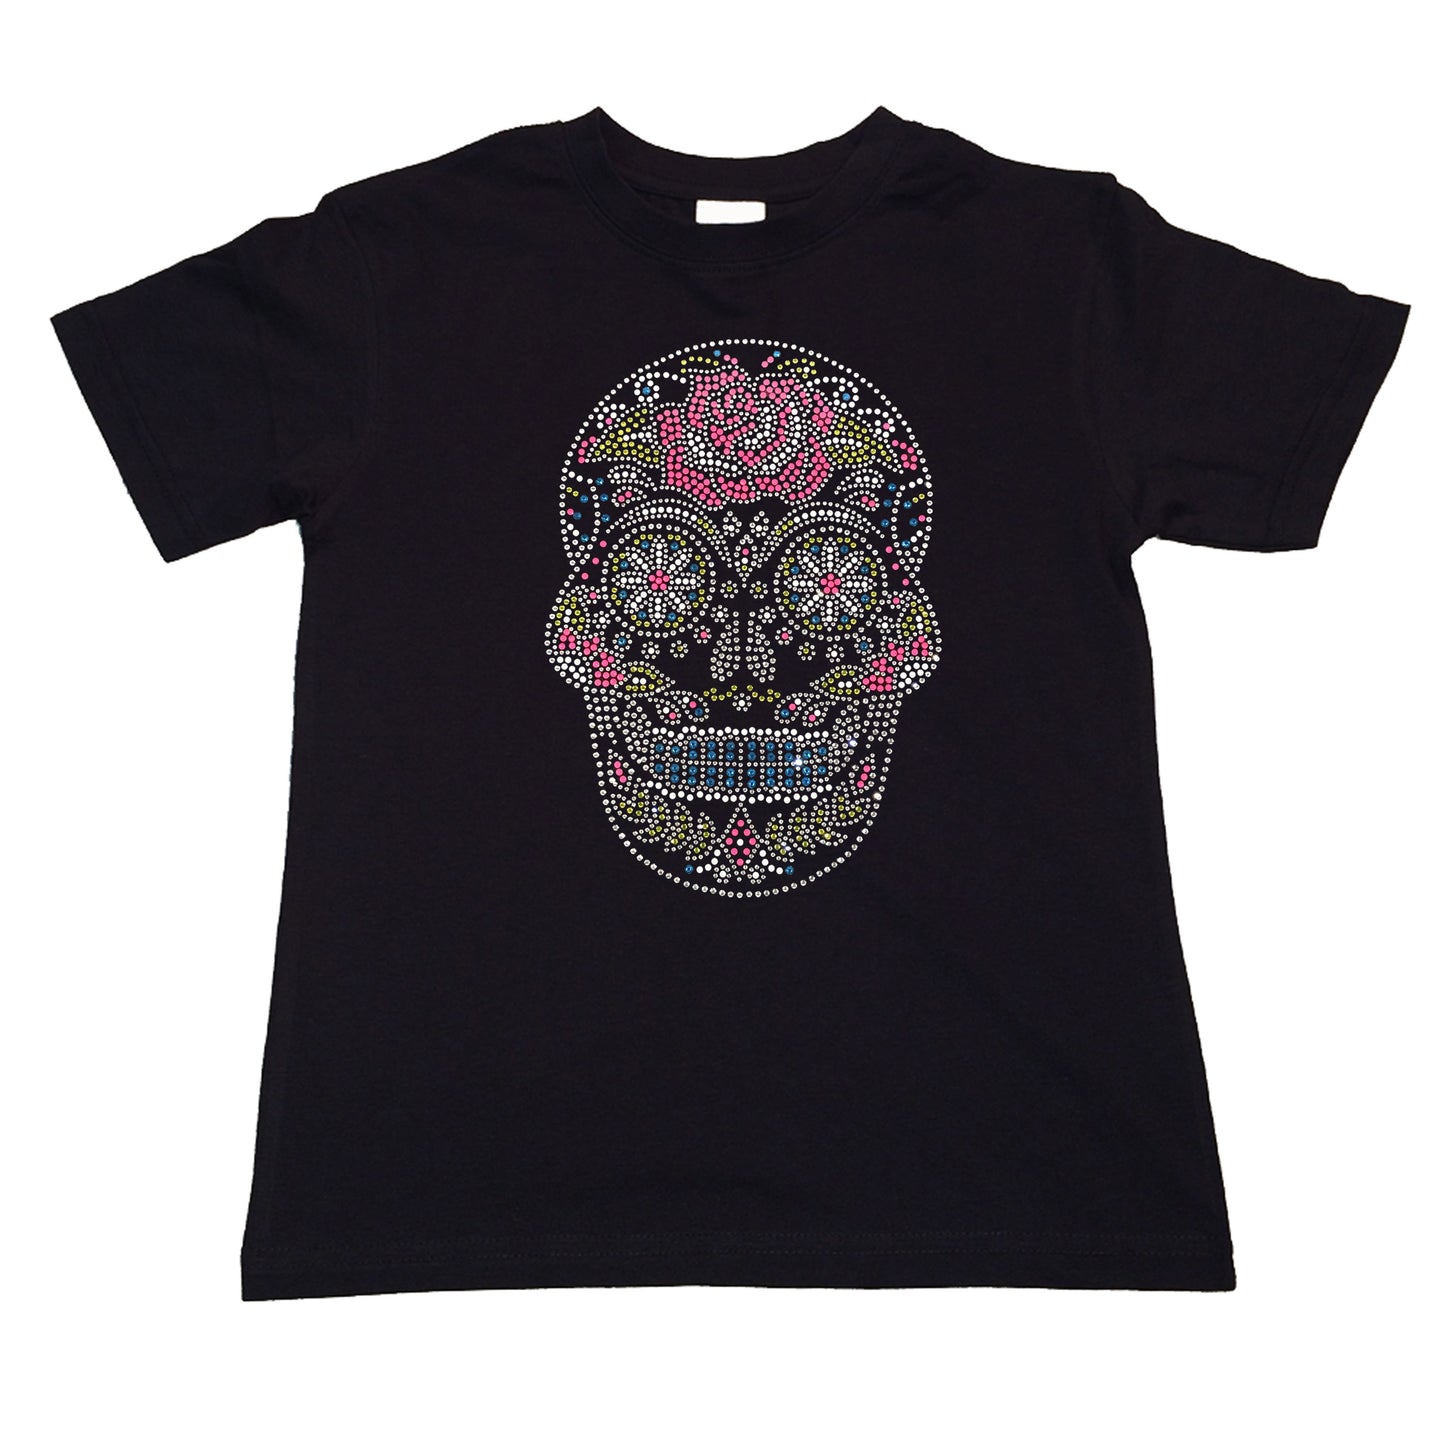 Girls Rhinestone T-Shirt " Sugarskull with Flower in Rhinestones" Kids Size 3 to 14 Available